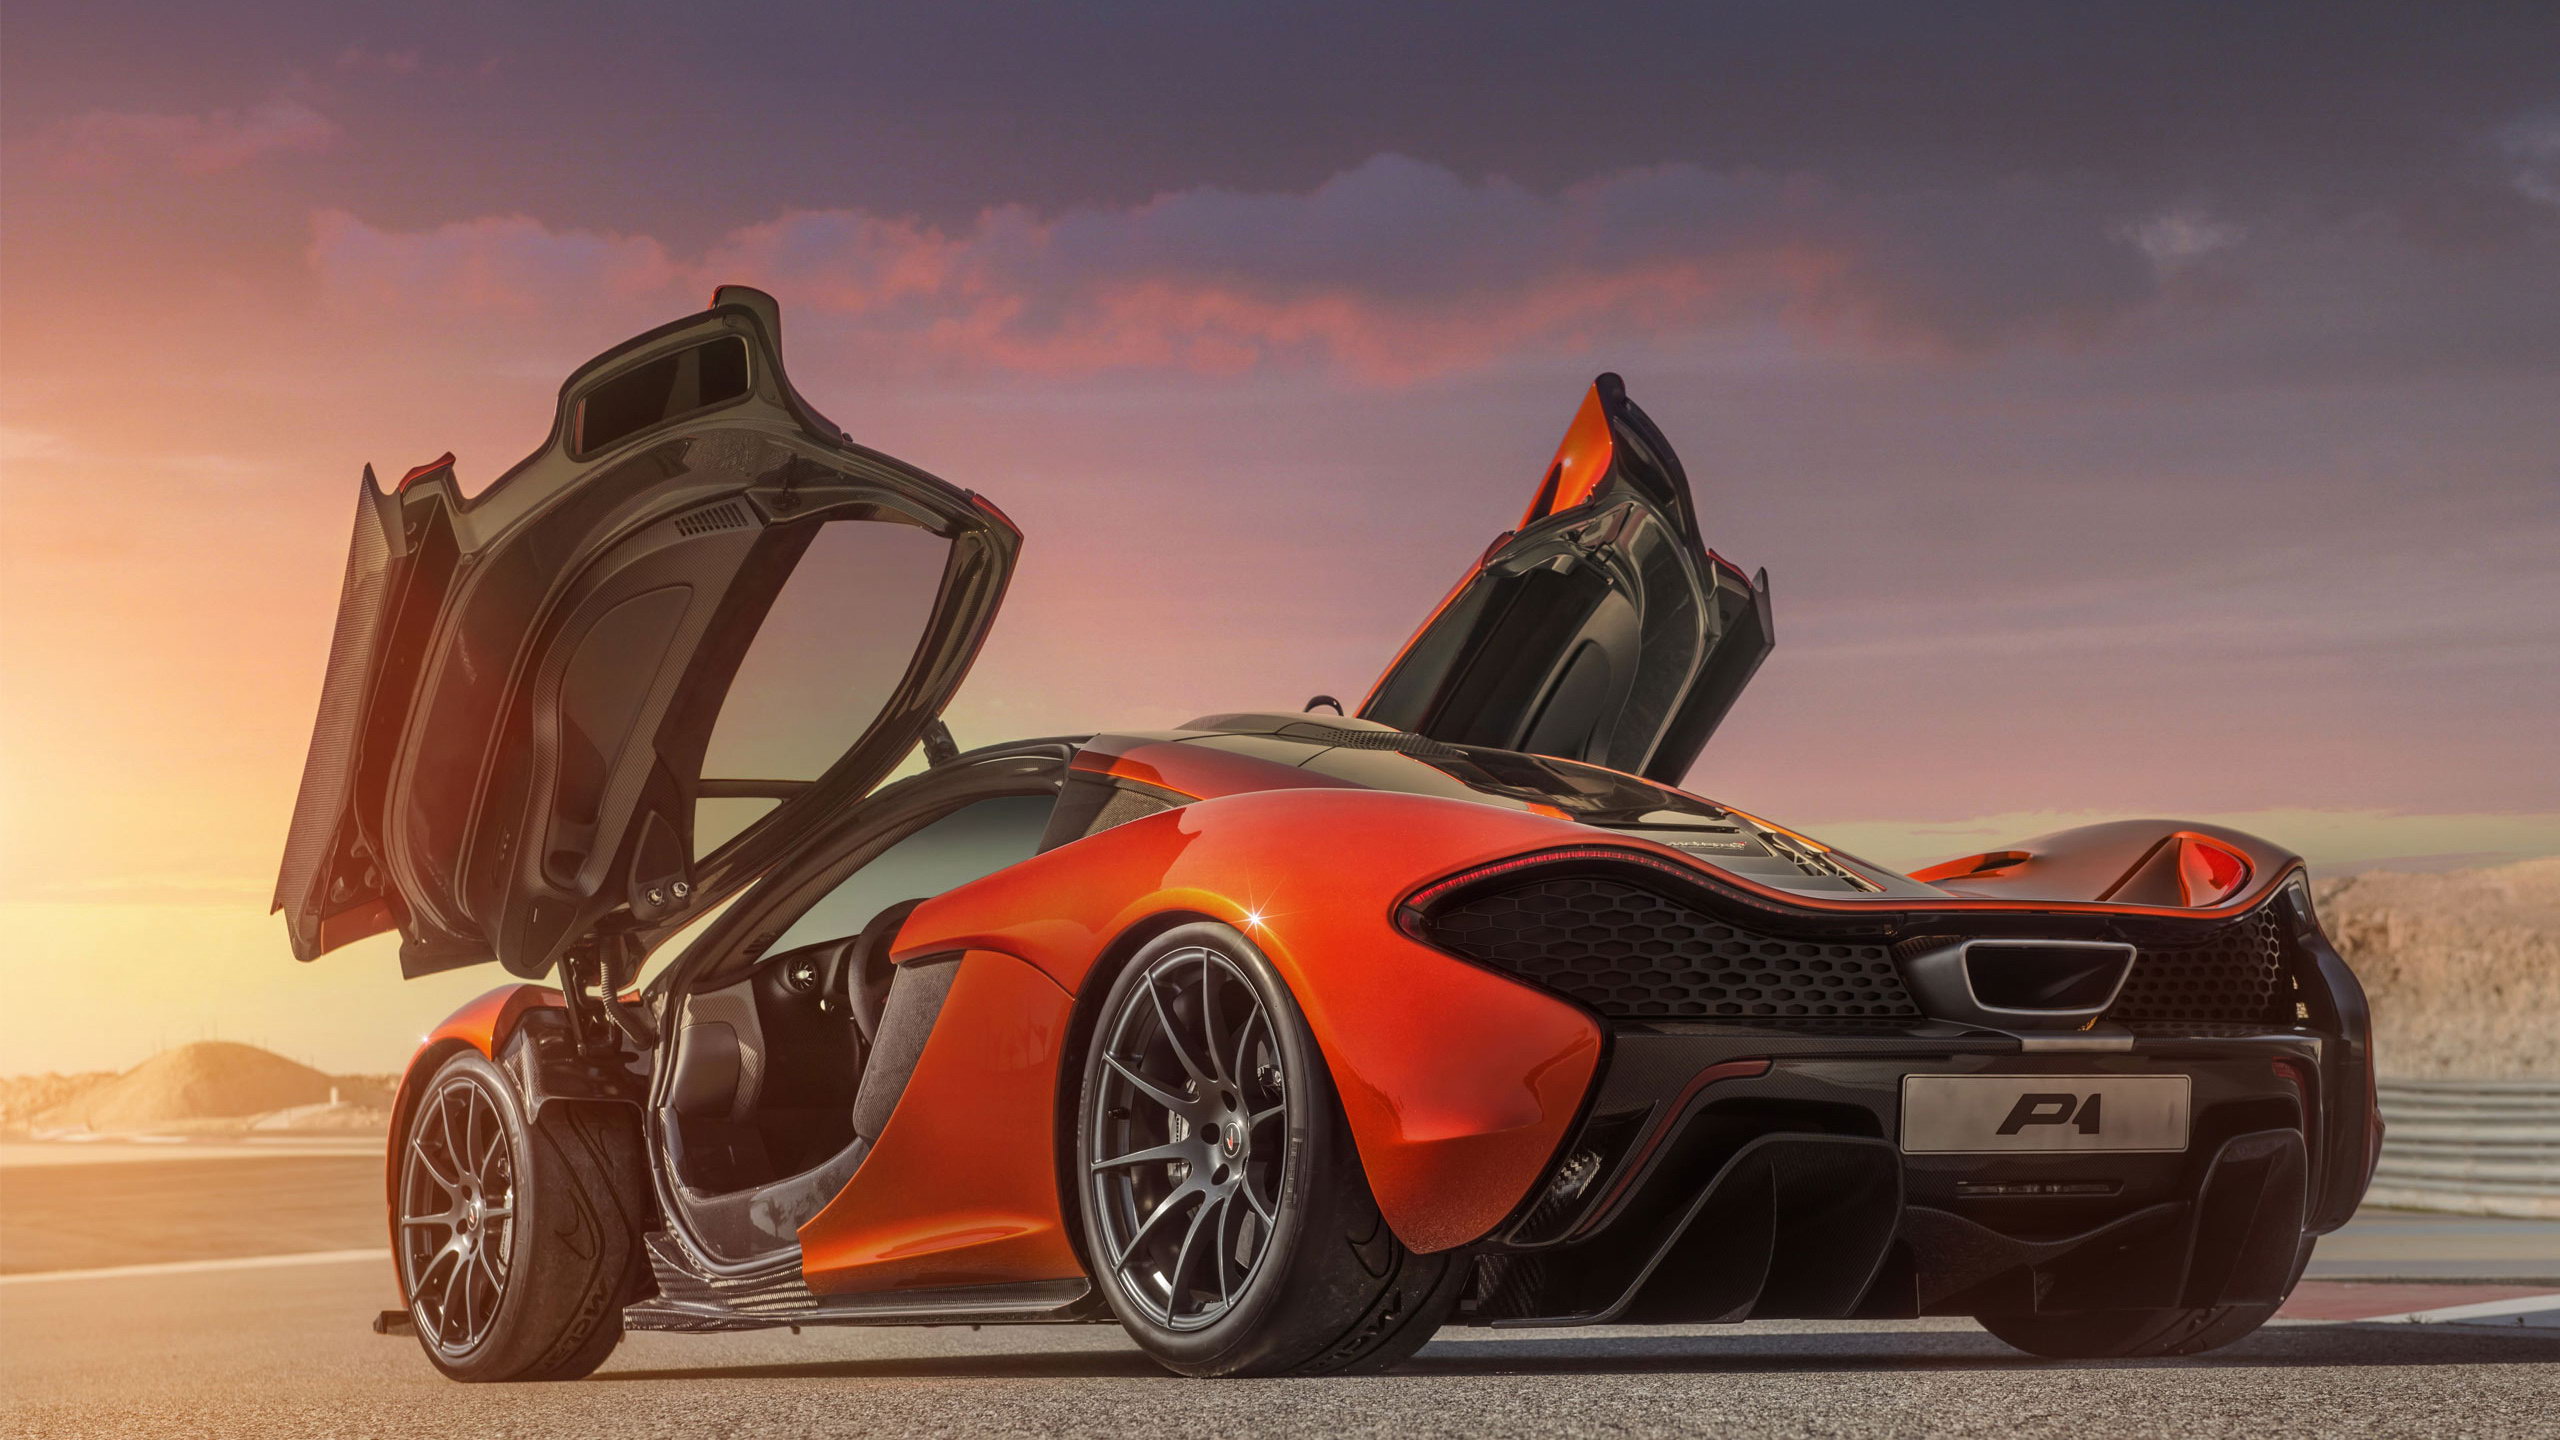 Cool-2014-McLaren-P1-Concept-sports-car-wallpapers